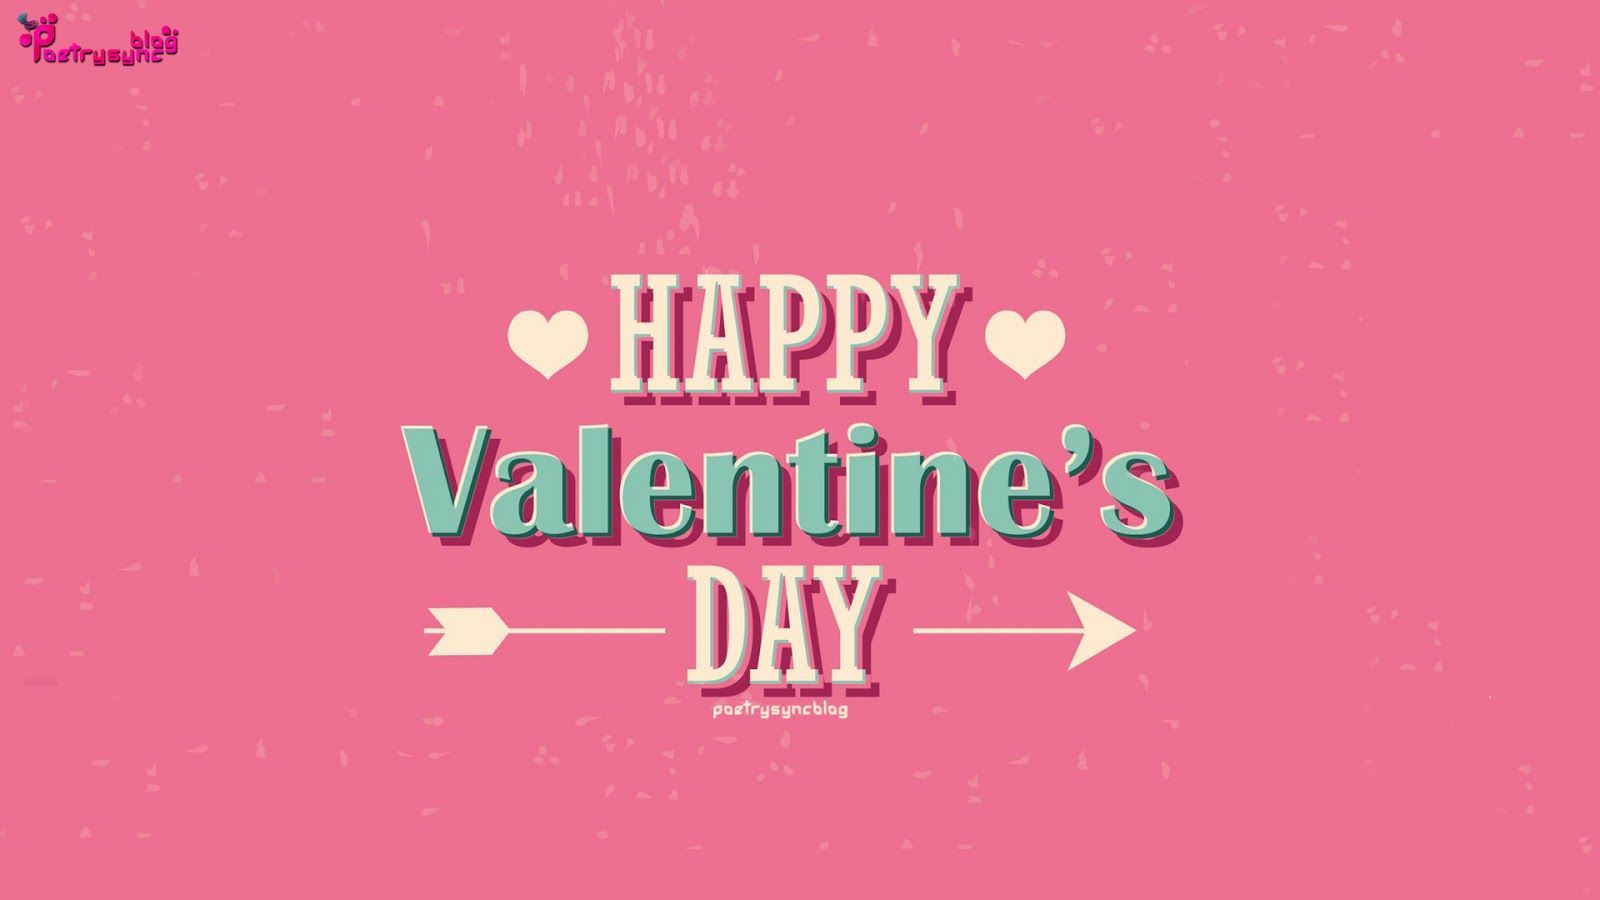 35+] Valentines Day Cute Wallpapers - WallpaperSafari